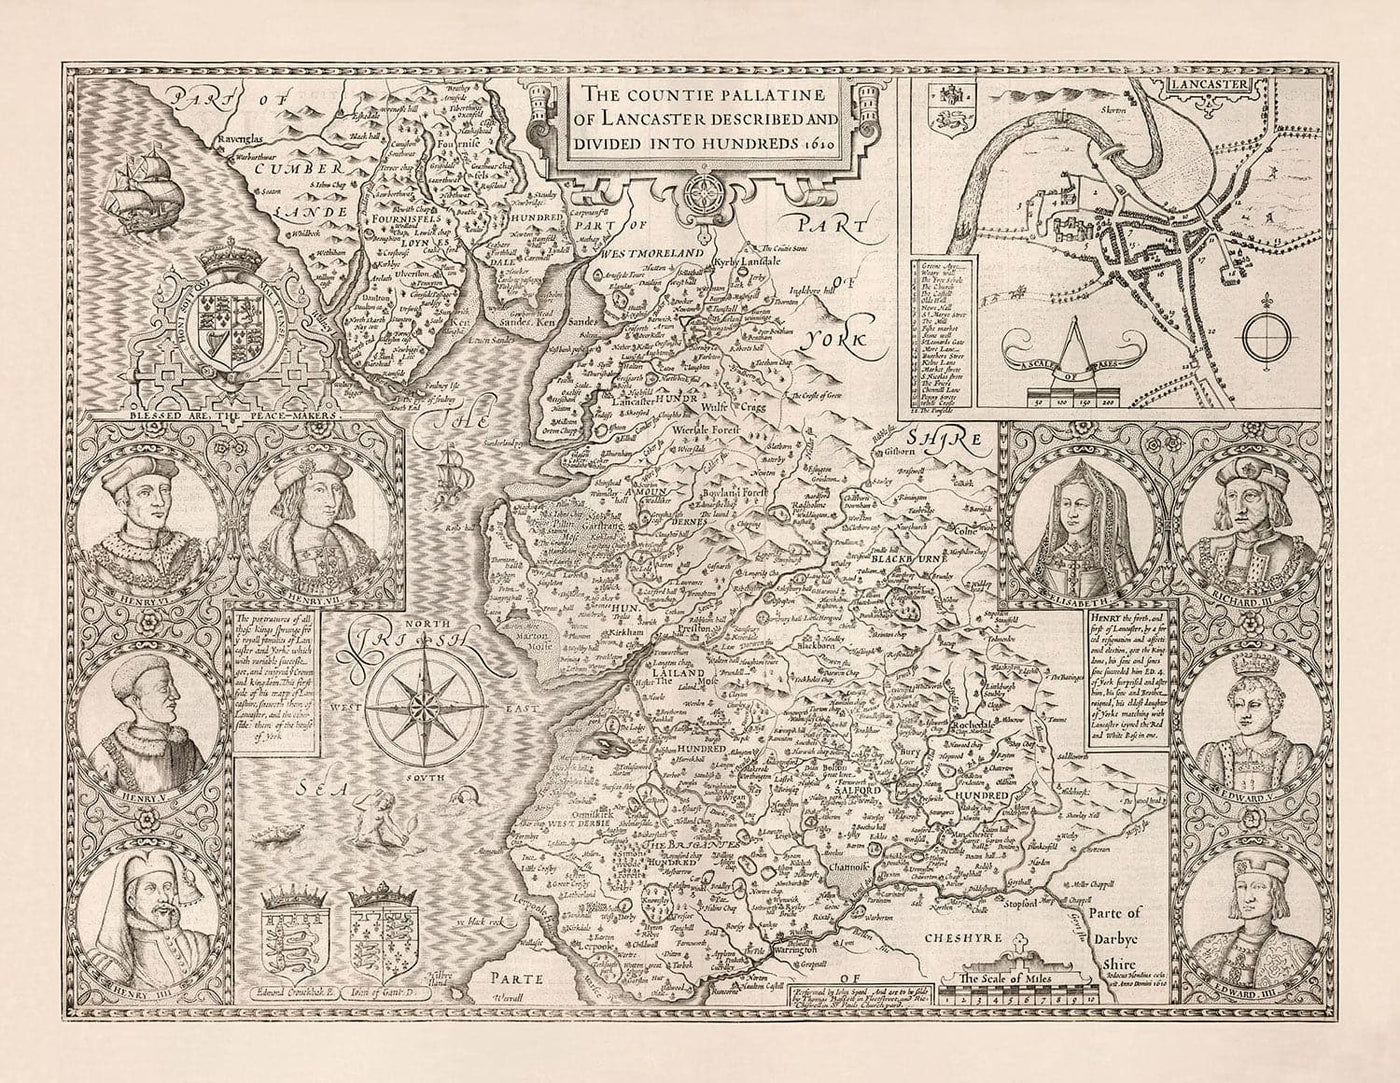 Old Map of Lancashire, 1611 by John Speed - Manchester, Liverpool, Preston, Blackburn, Burnley, Windermere